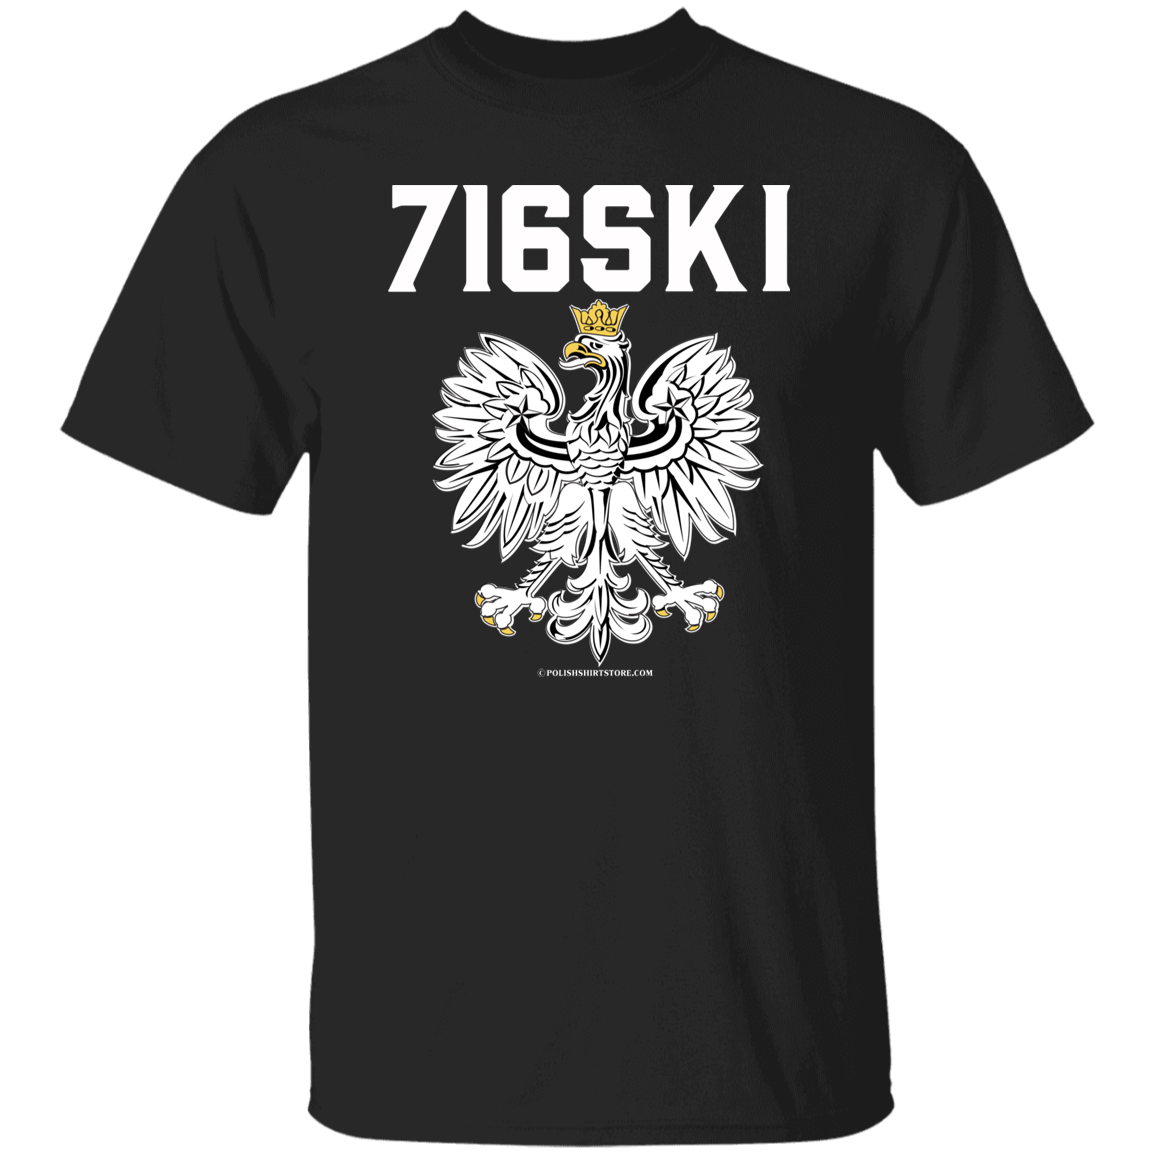 716SKI Apparel CustomCat G500 5.3 oz. T-Shirt Black S